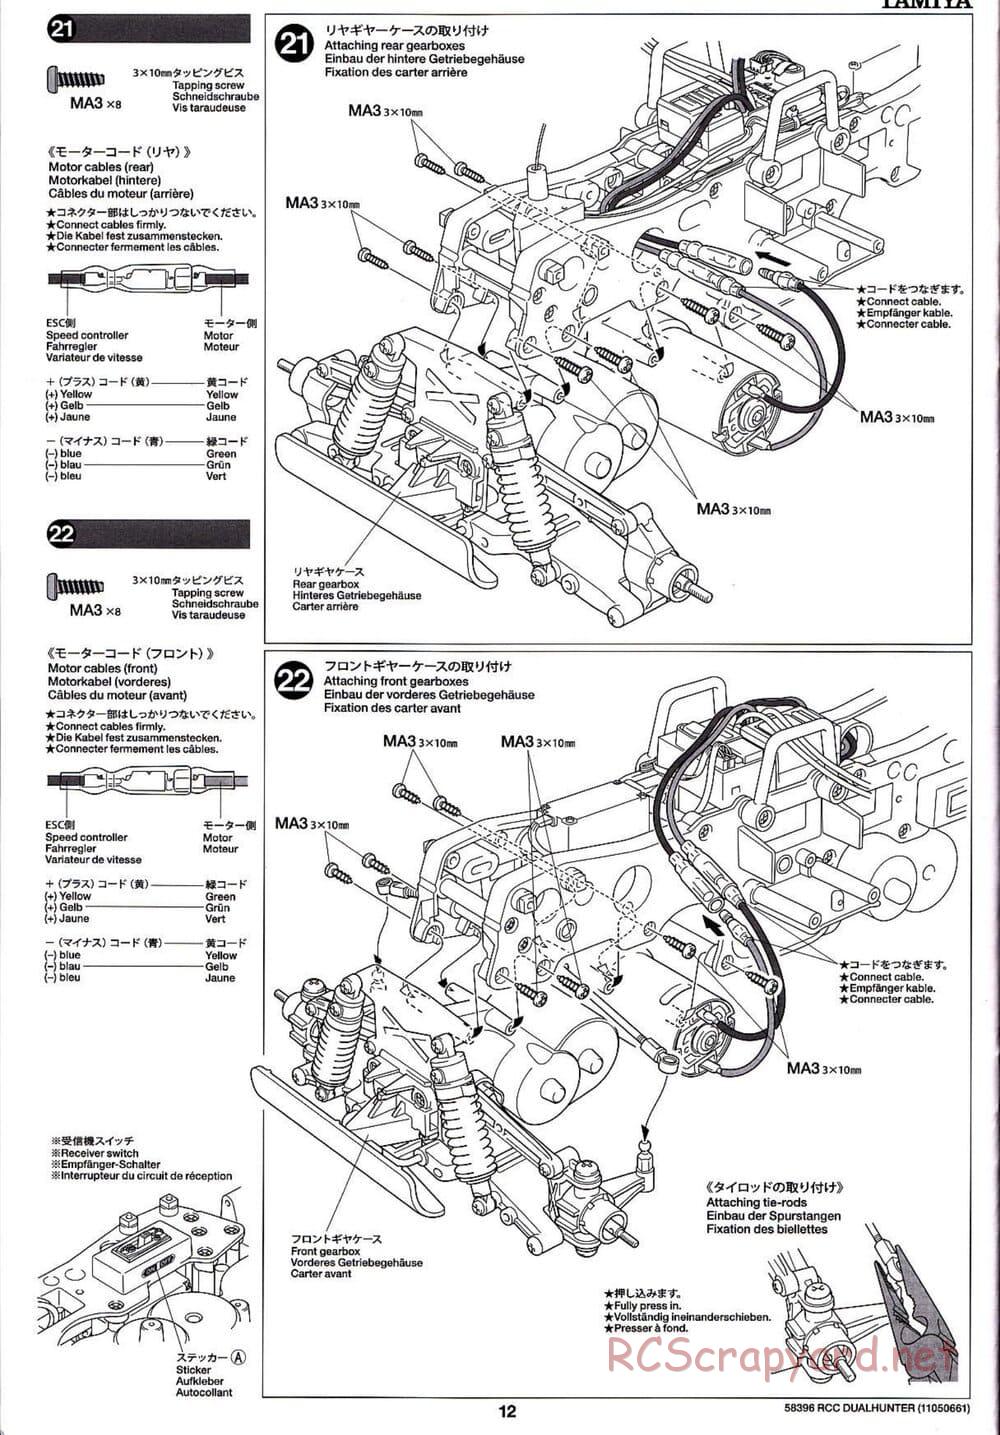 Tamiya - Dualhunter - WR-01 Chassis - Manual - Page 12